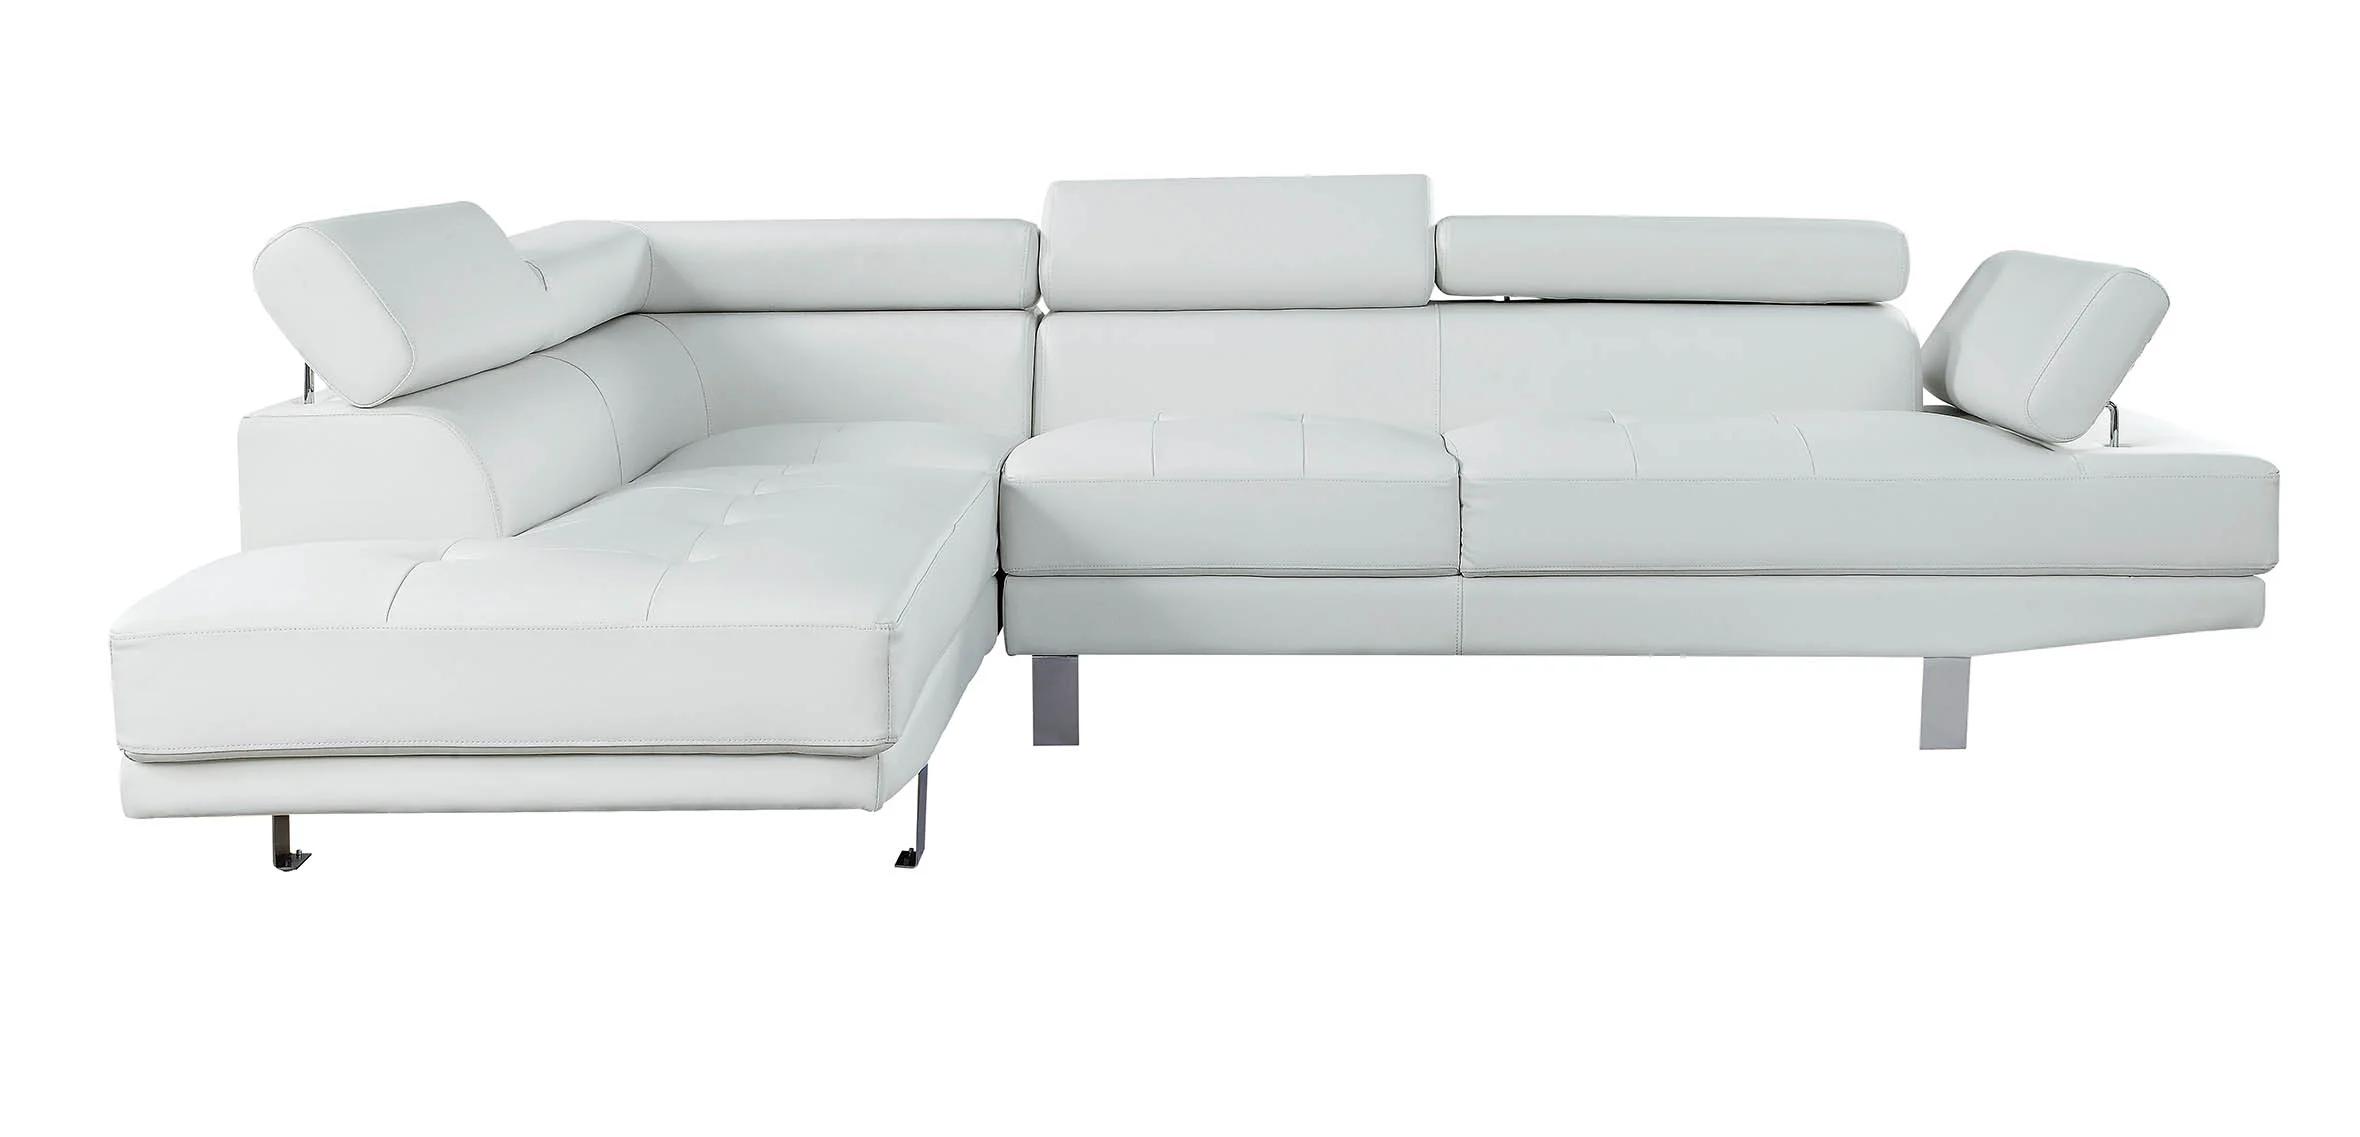 Contemporary Sectional Sofa Connor 52645-3pcs in Cream PU